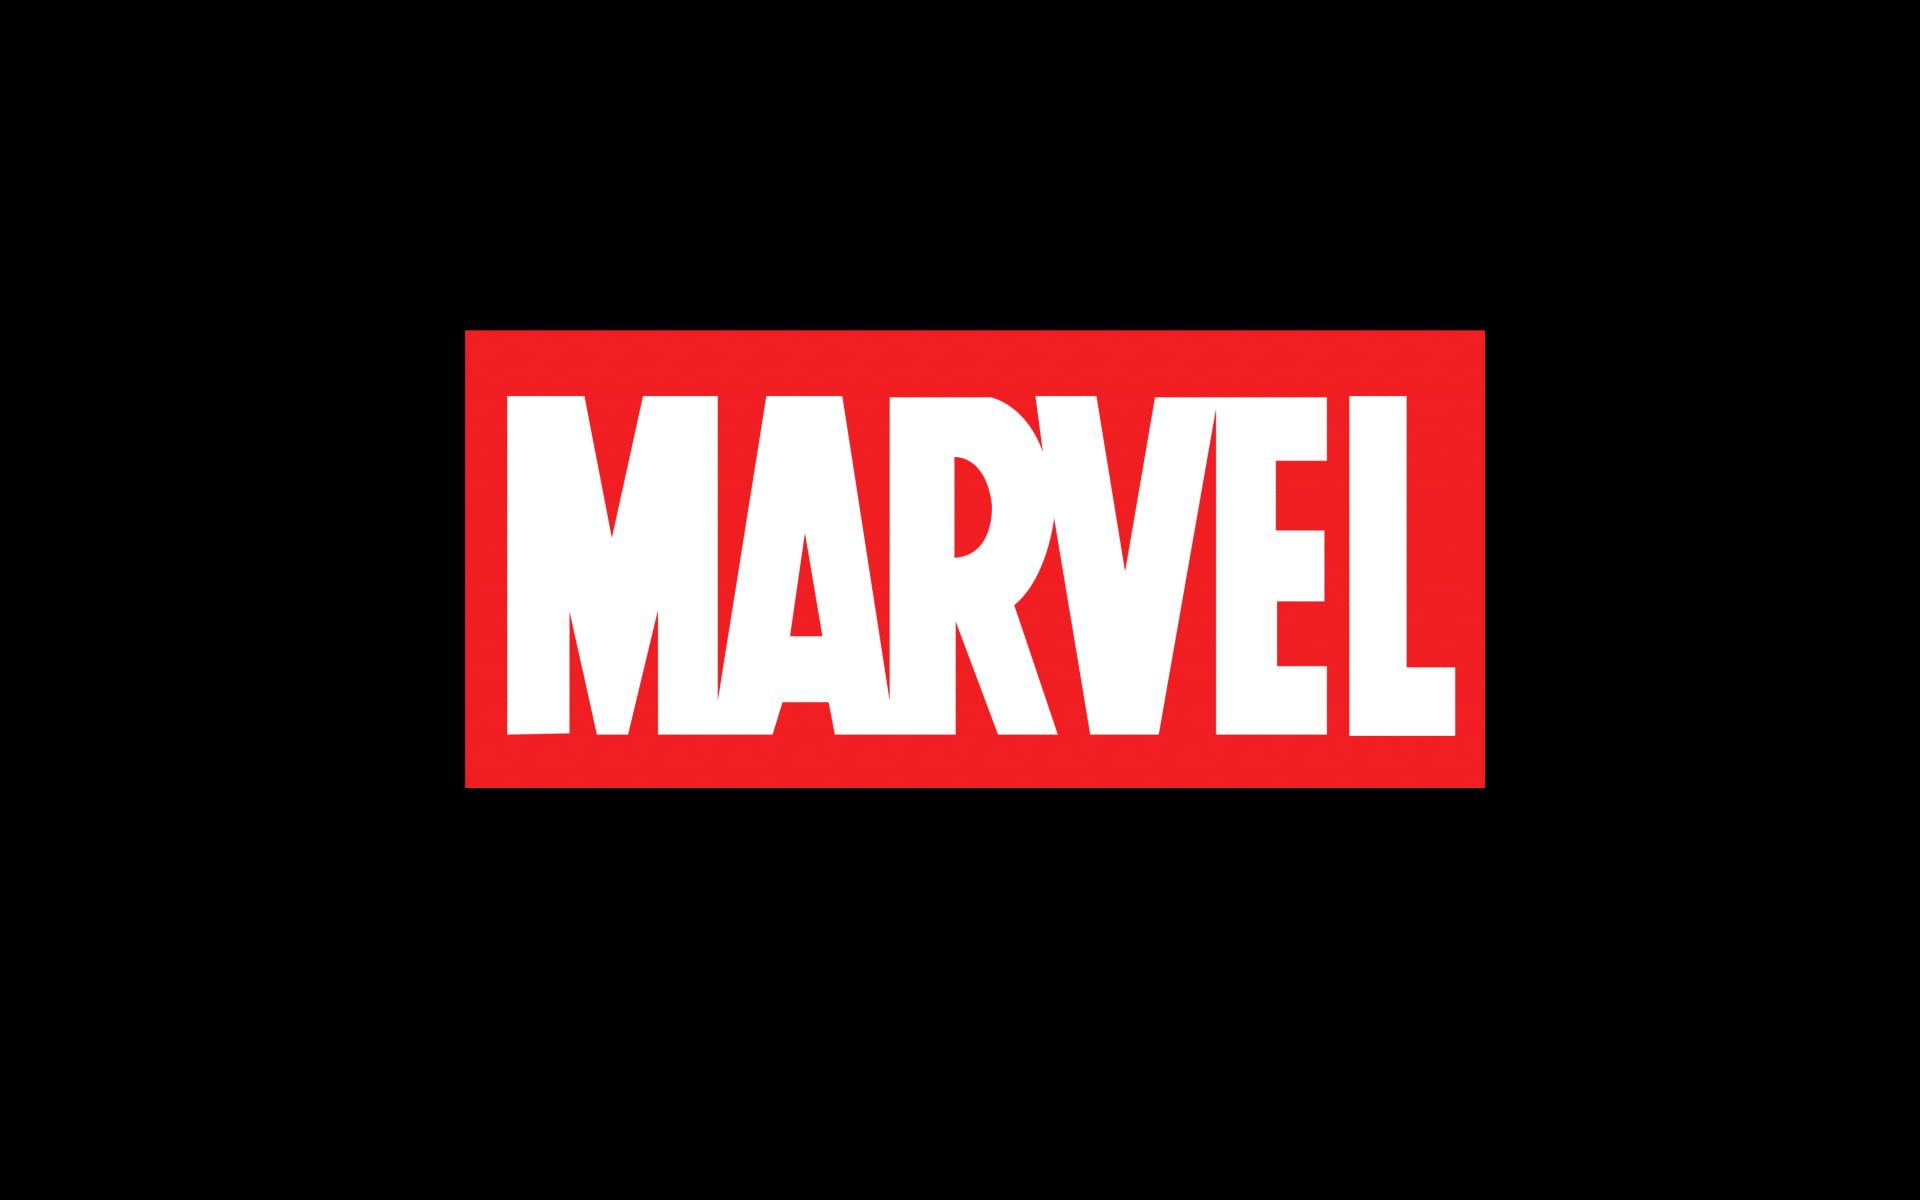 HD wallpaper: Marvel logo, minimalism, Studio, sign, red, business, illustration